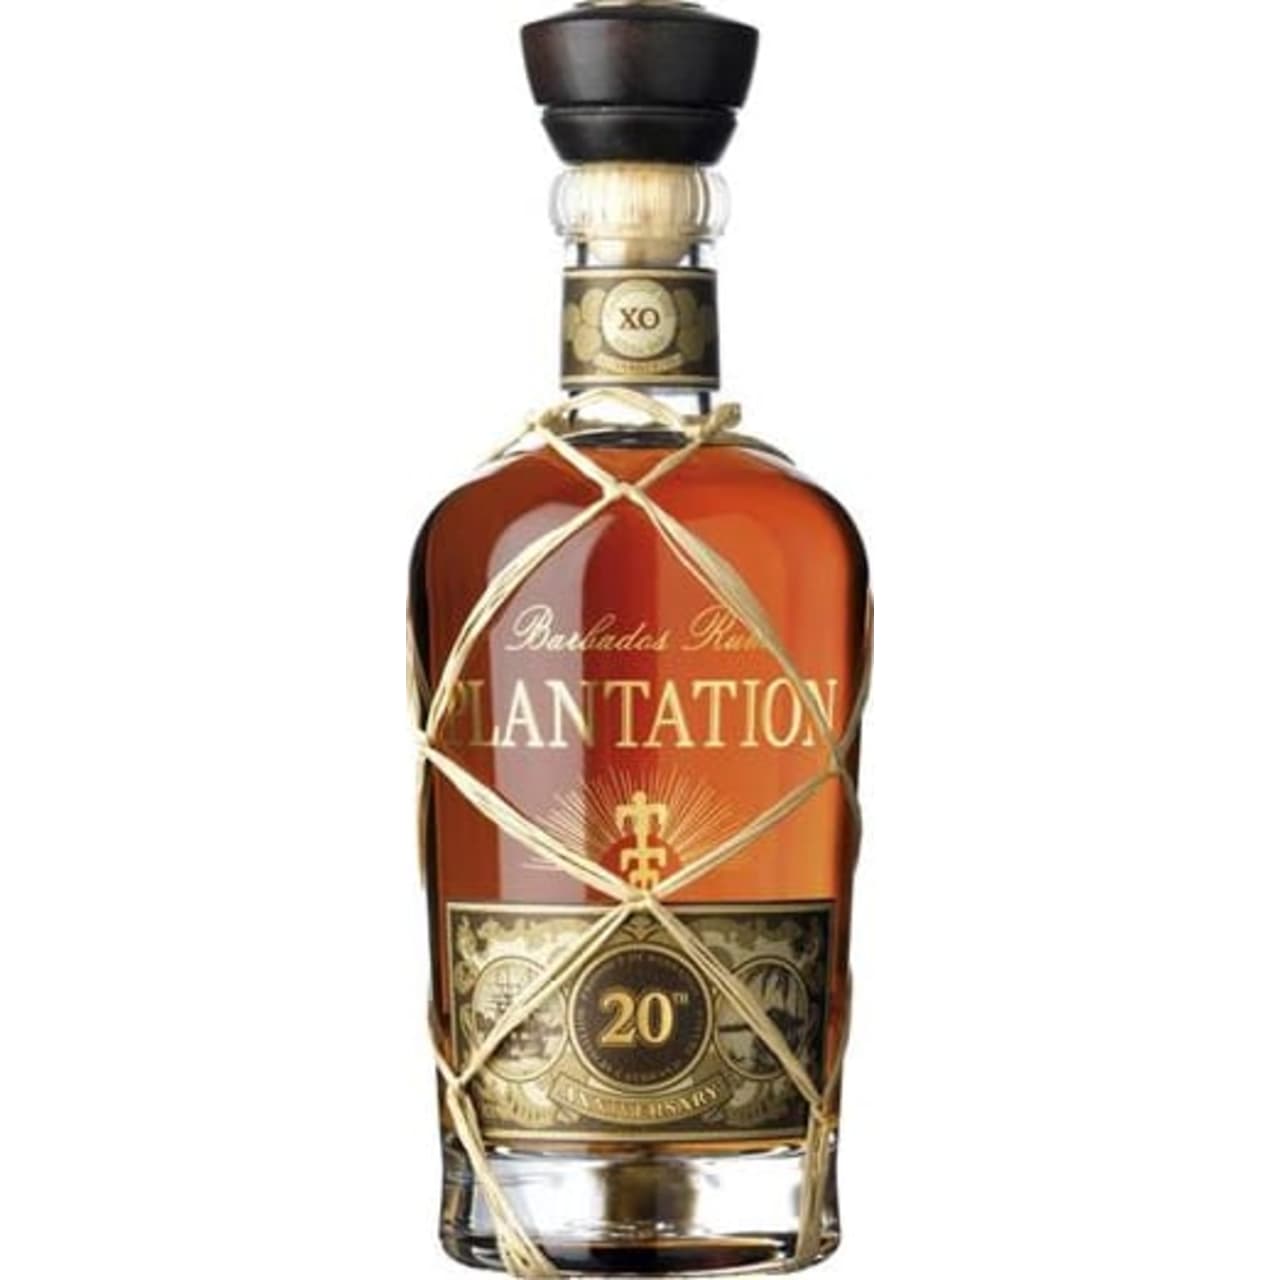 Product Image - Plantation XO Rum 20th Anniversary Decanter